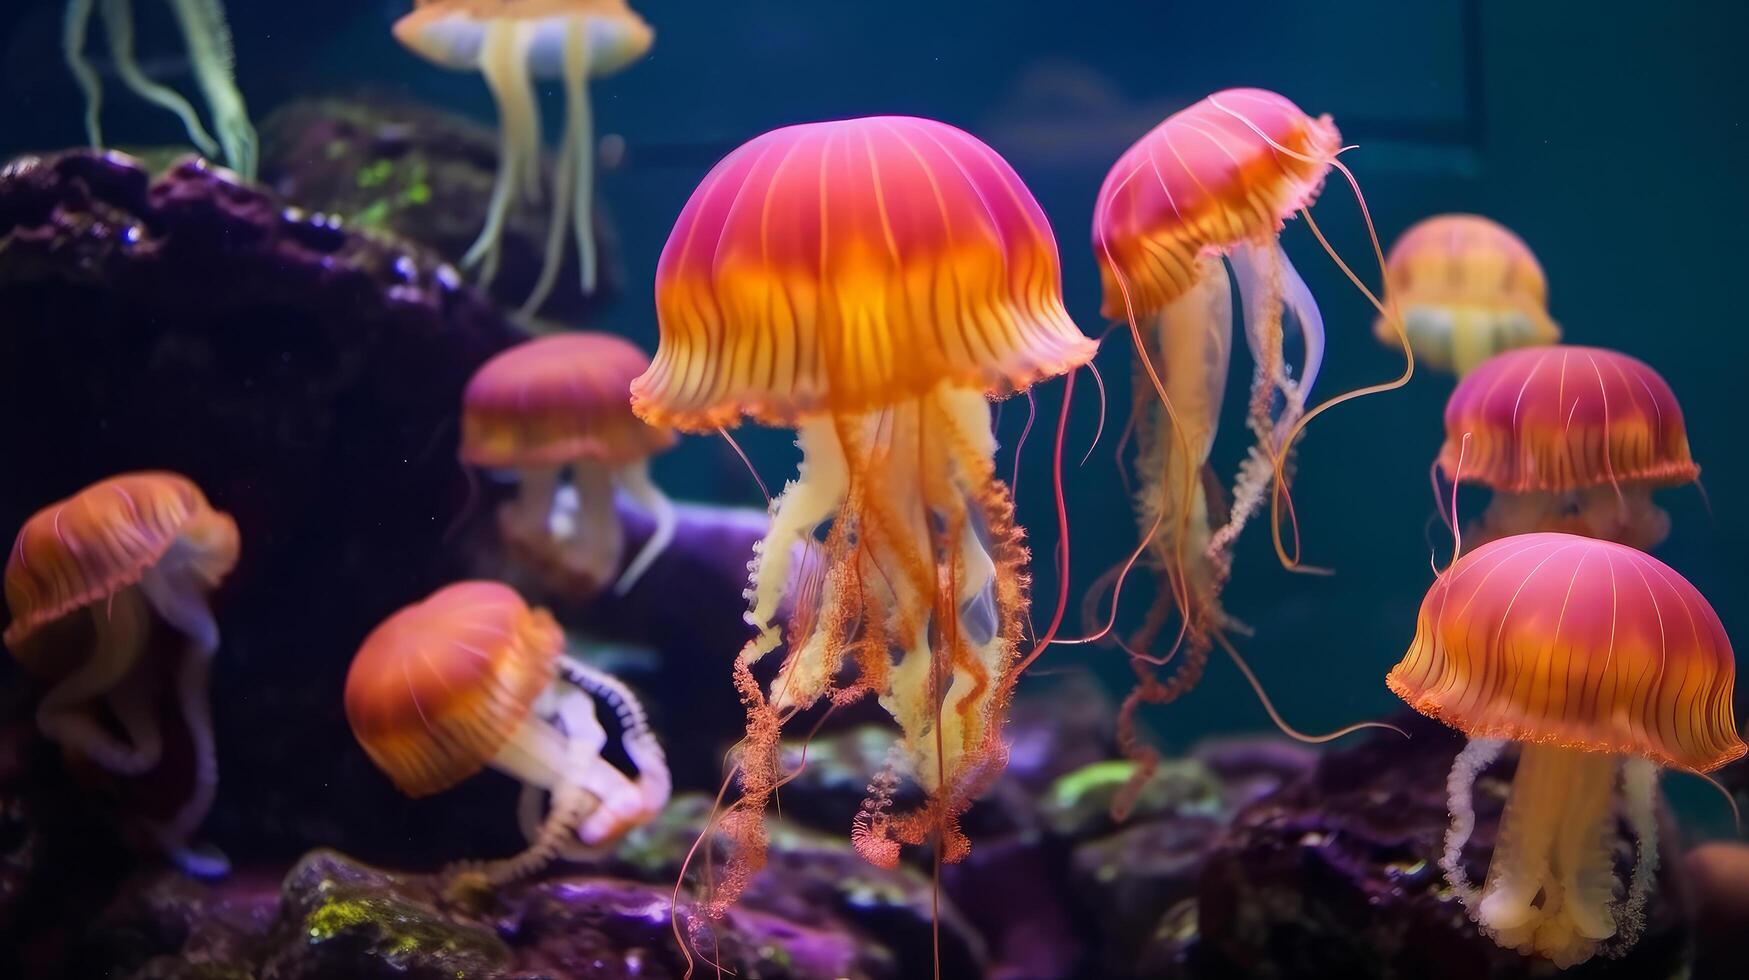 Natural Jellyfish background. Illustration photo